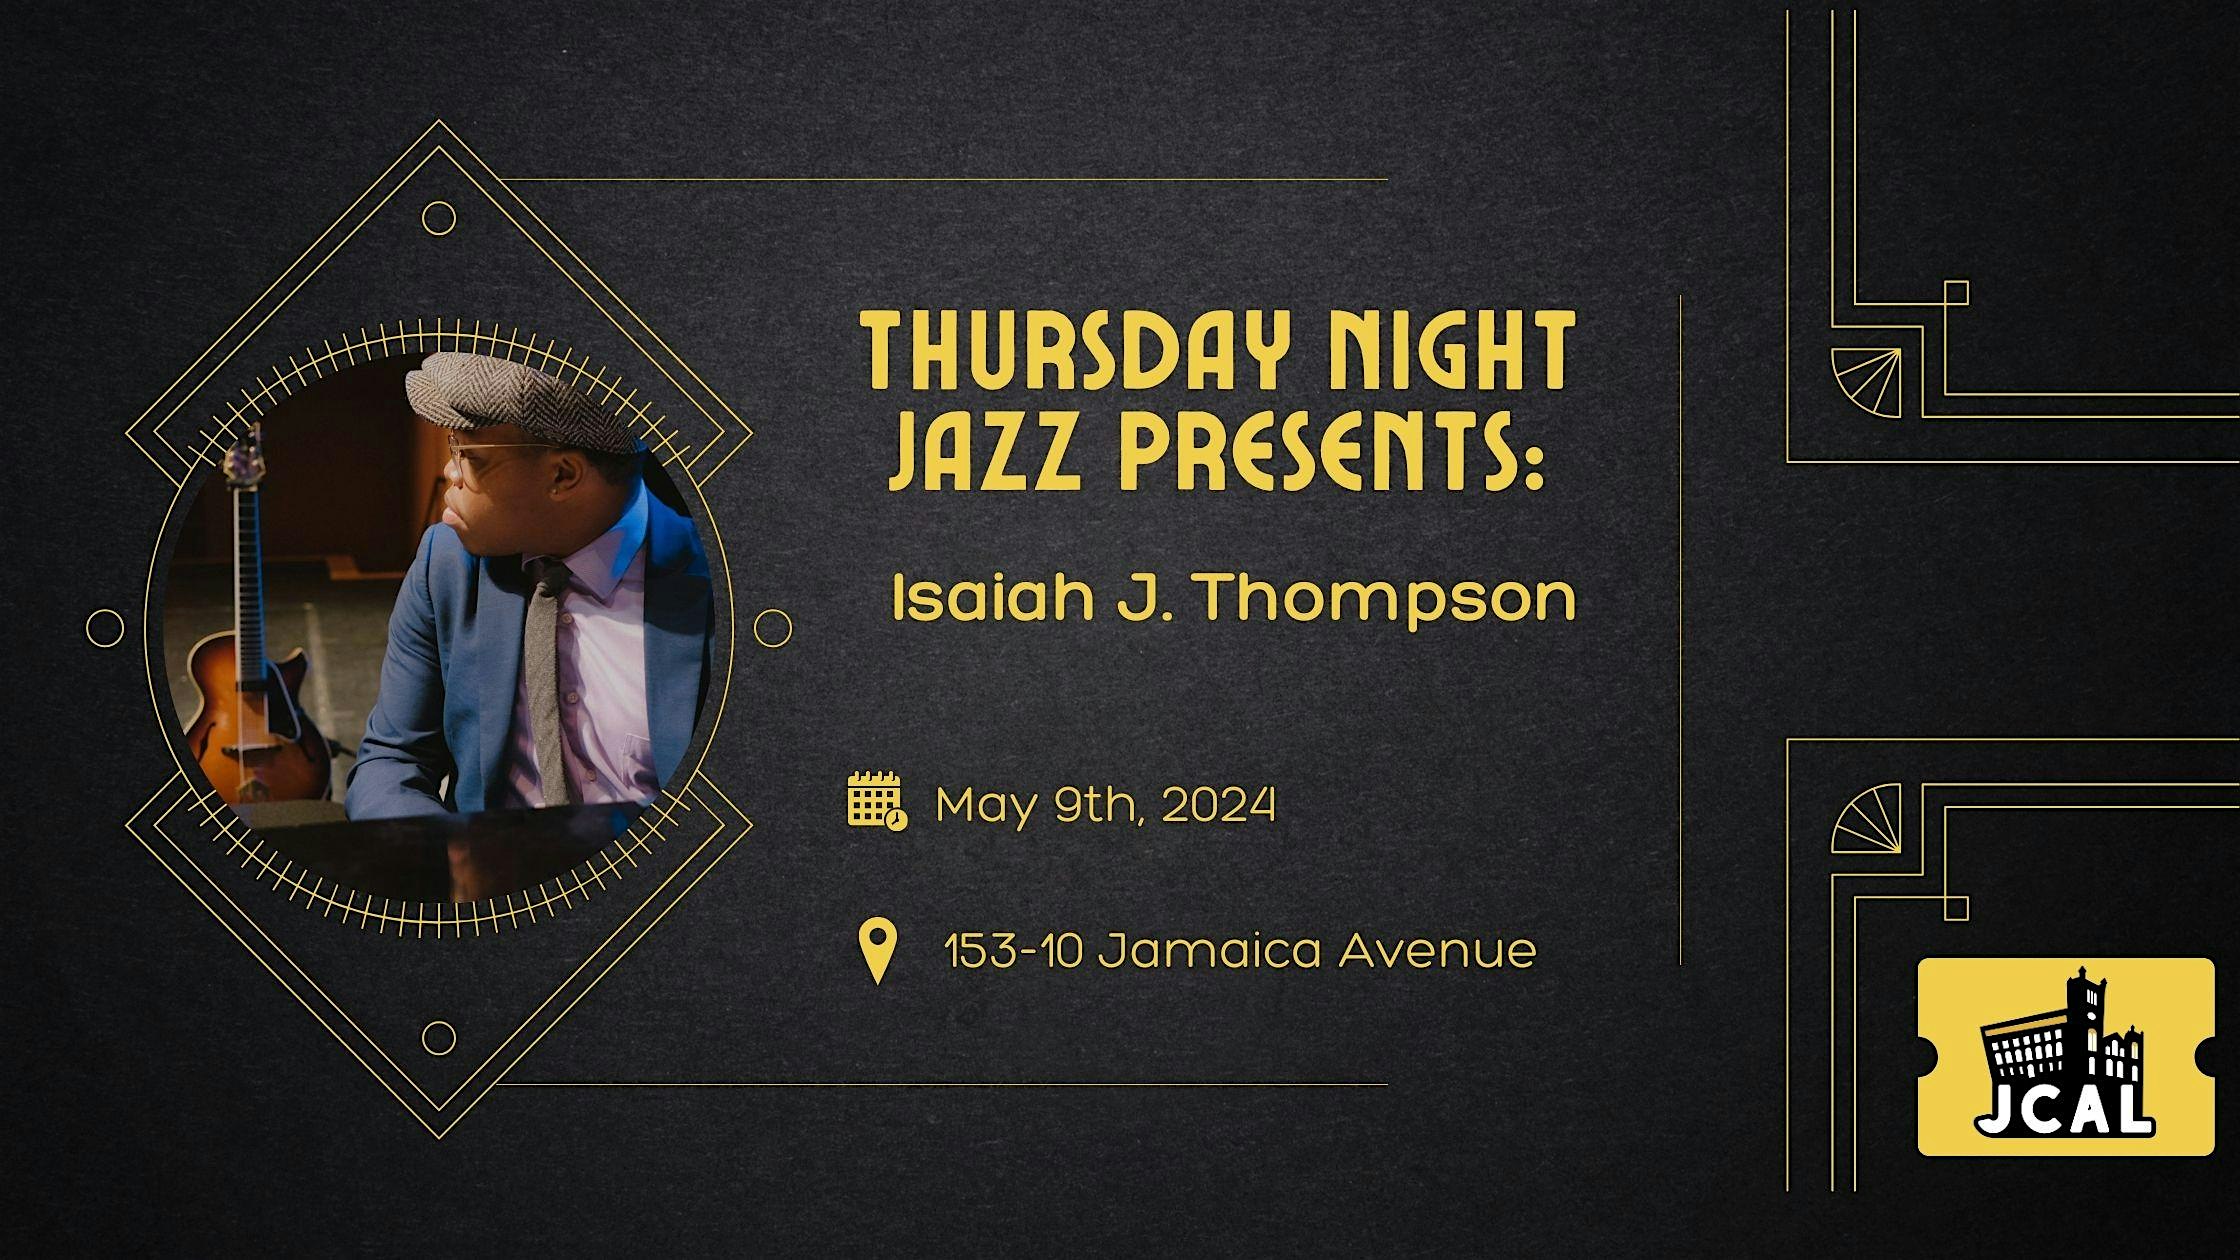 Thursday Night Jazz Presents Isaiah J. Thompson